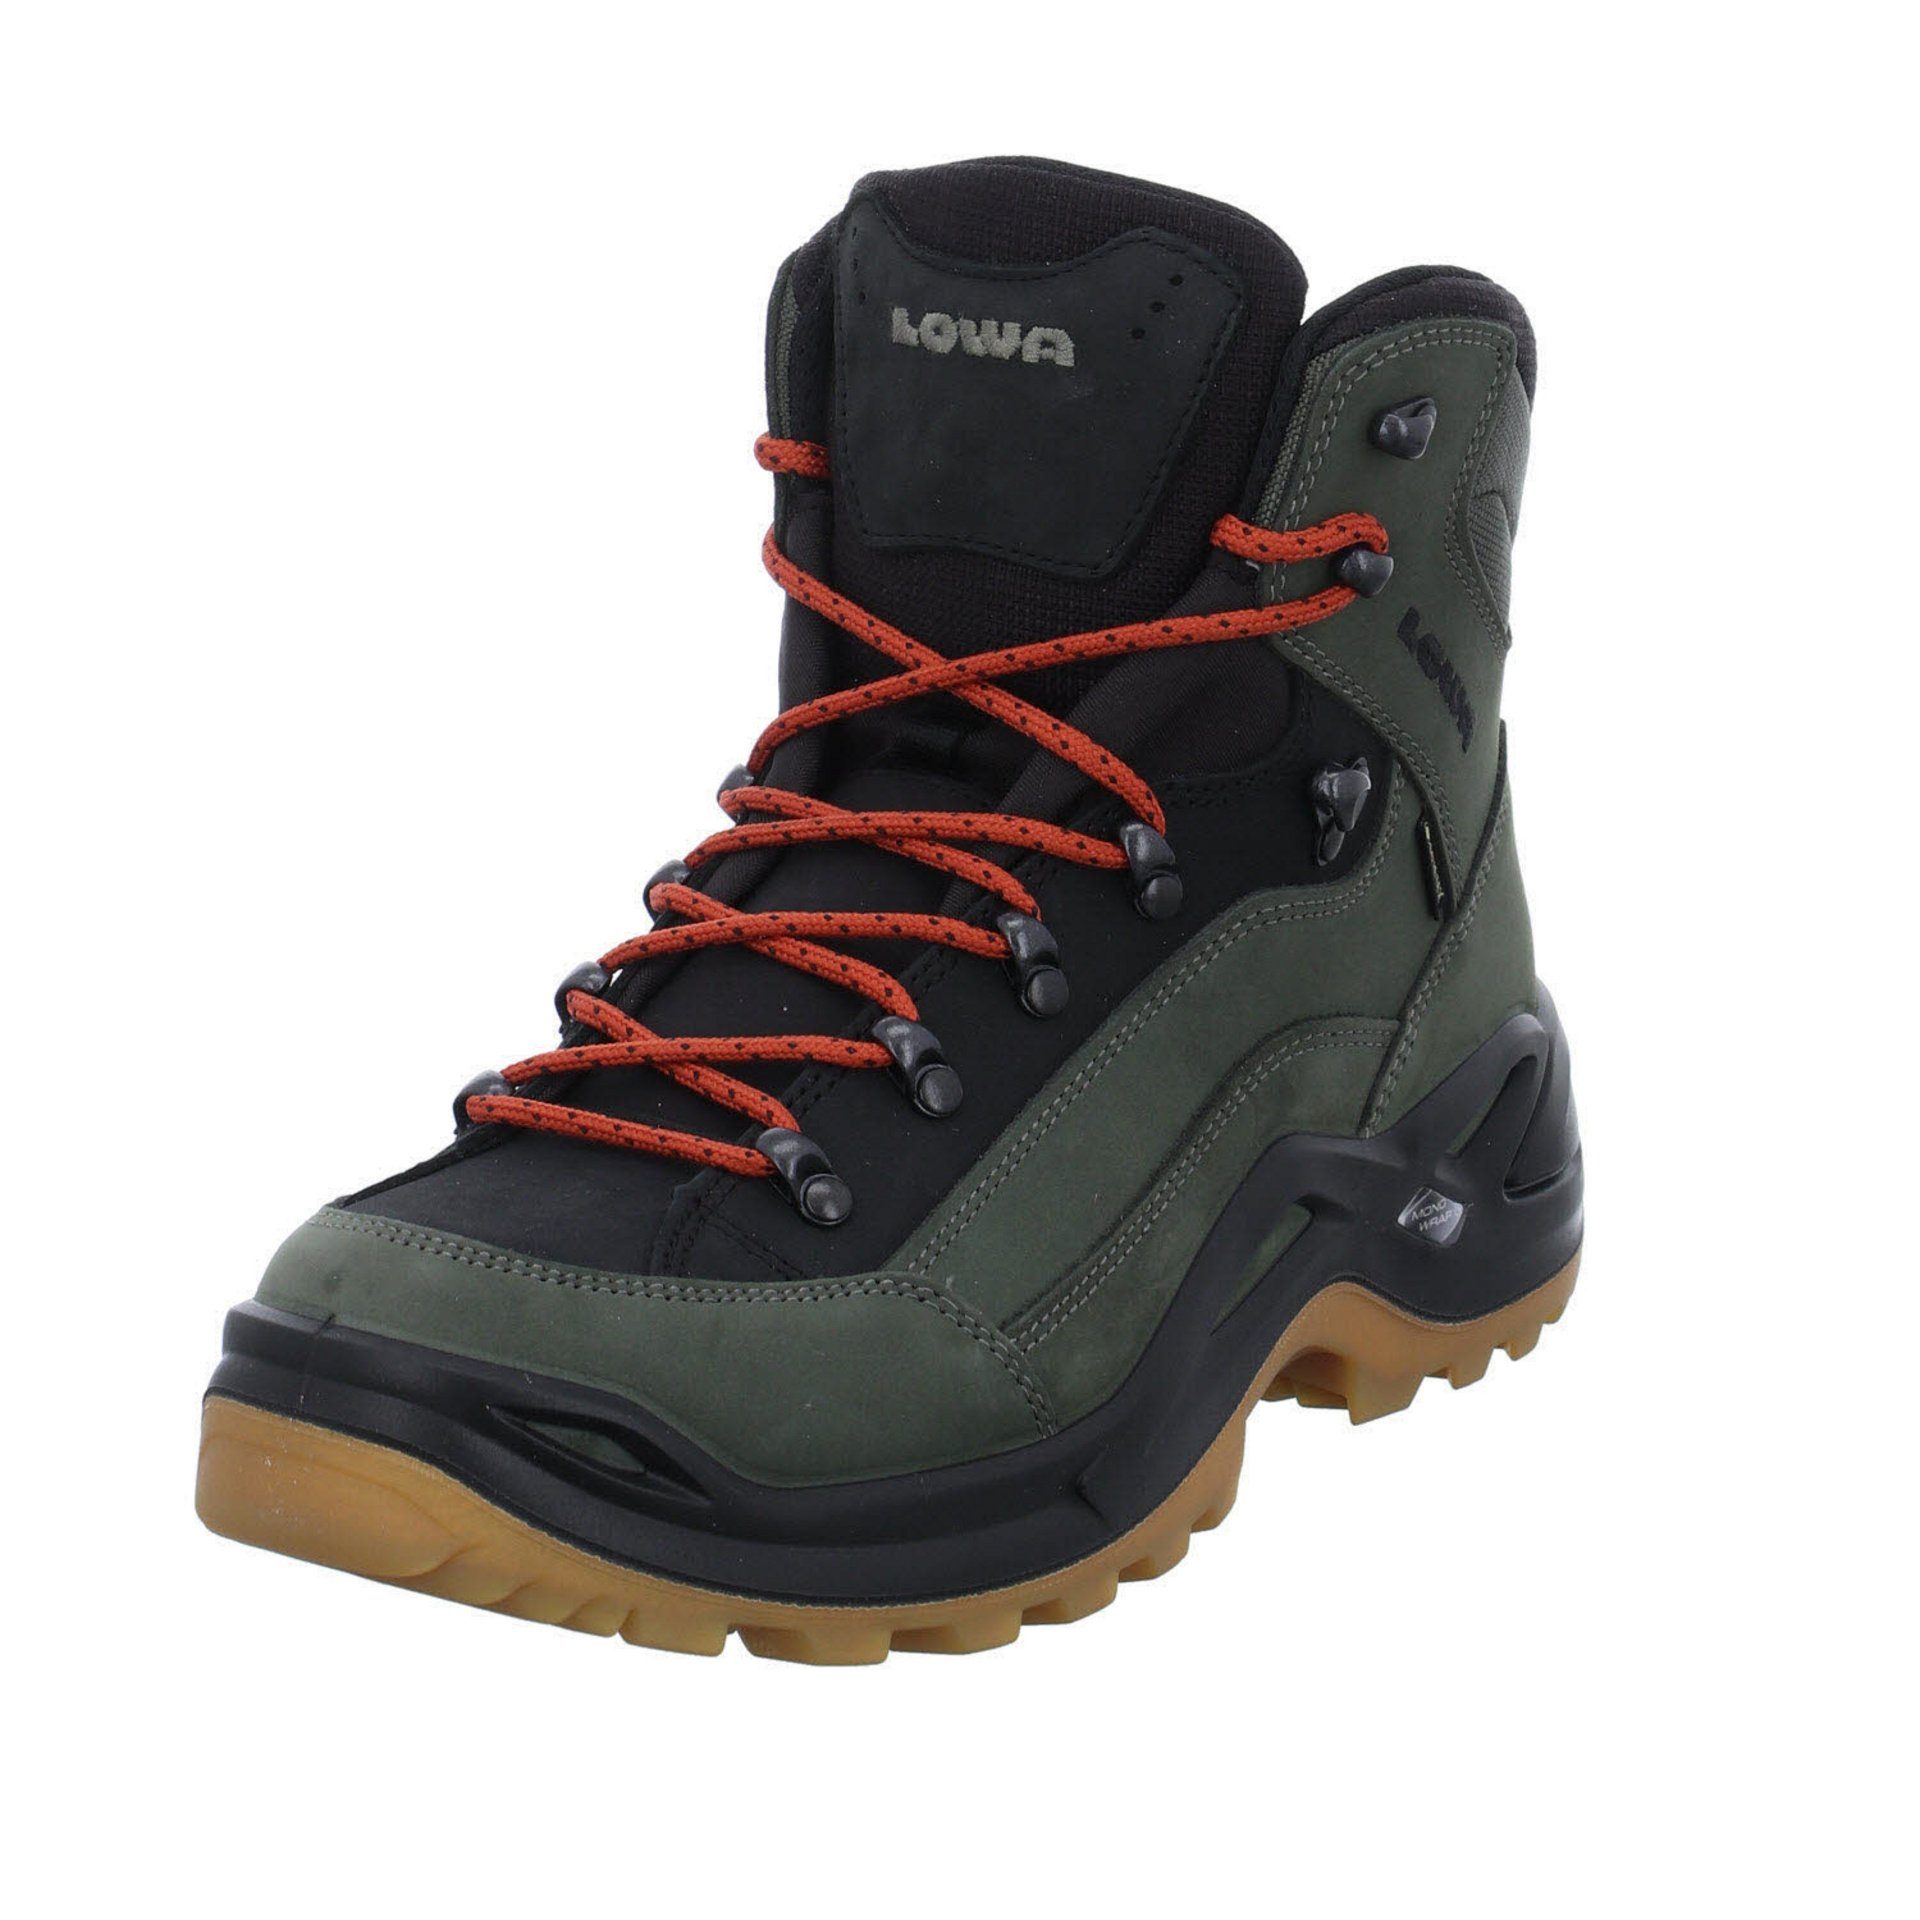 Lowa Herren Outdoor Schuhe Renegade GTX Mid Outdoorschuh Leder-/Textilkombination FOREST/ORANGE